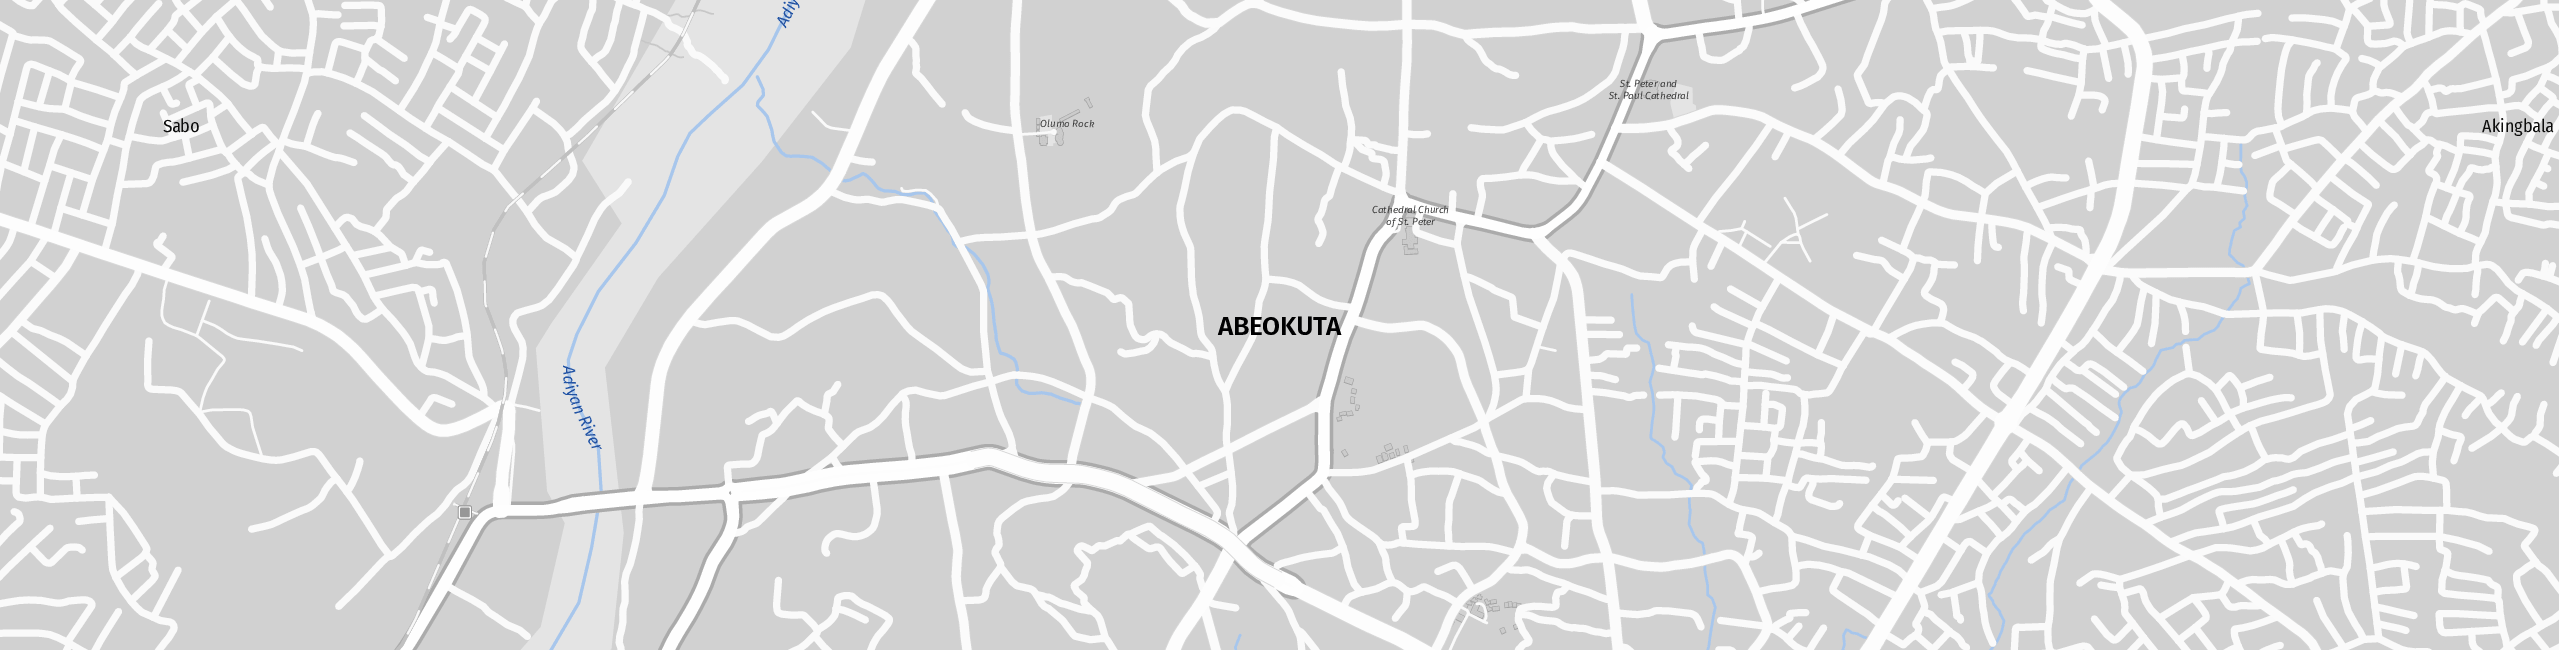 Stadtplan Abeokuta zum Downloaden.